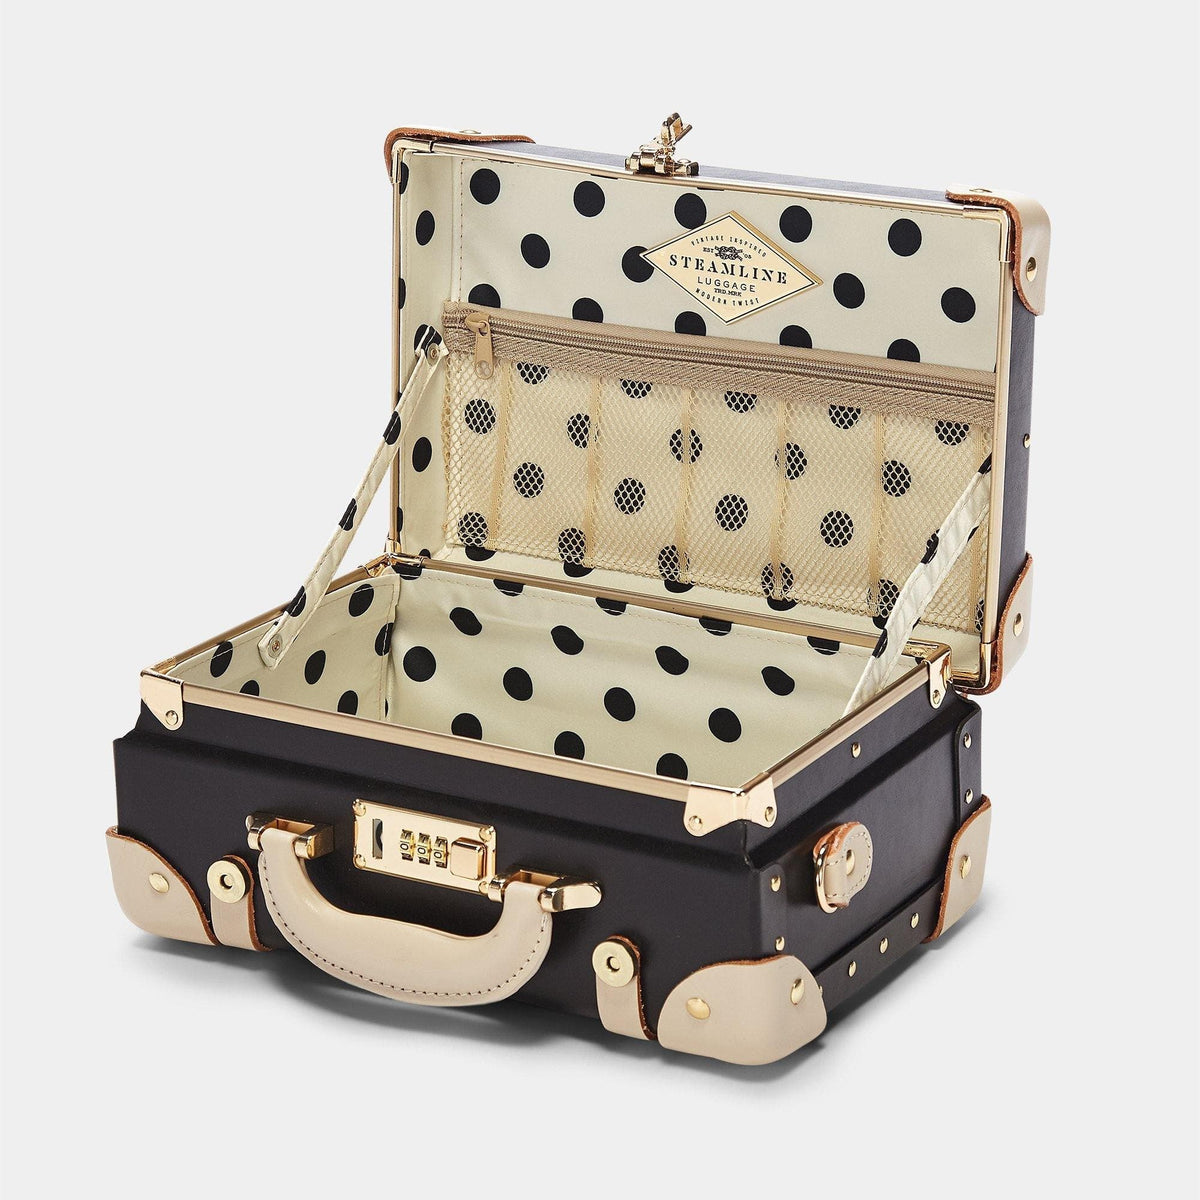 The Botanist Vanity  Small Vintage Style Suitcase Travel Vanity Case –  Steamline Luggage